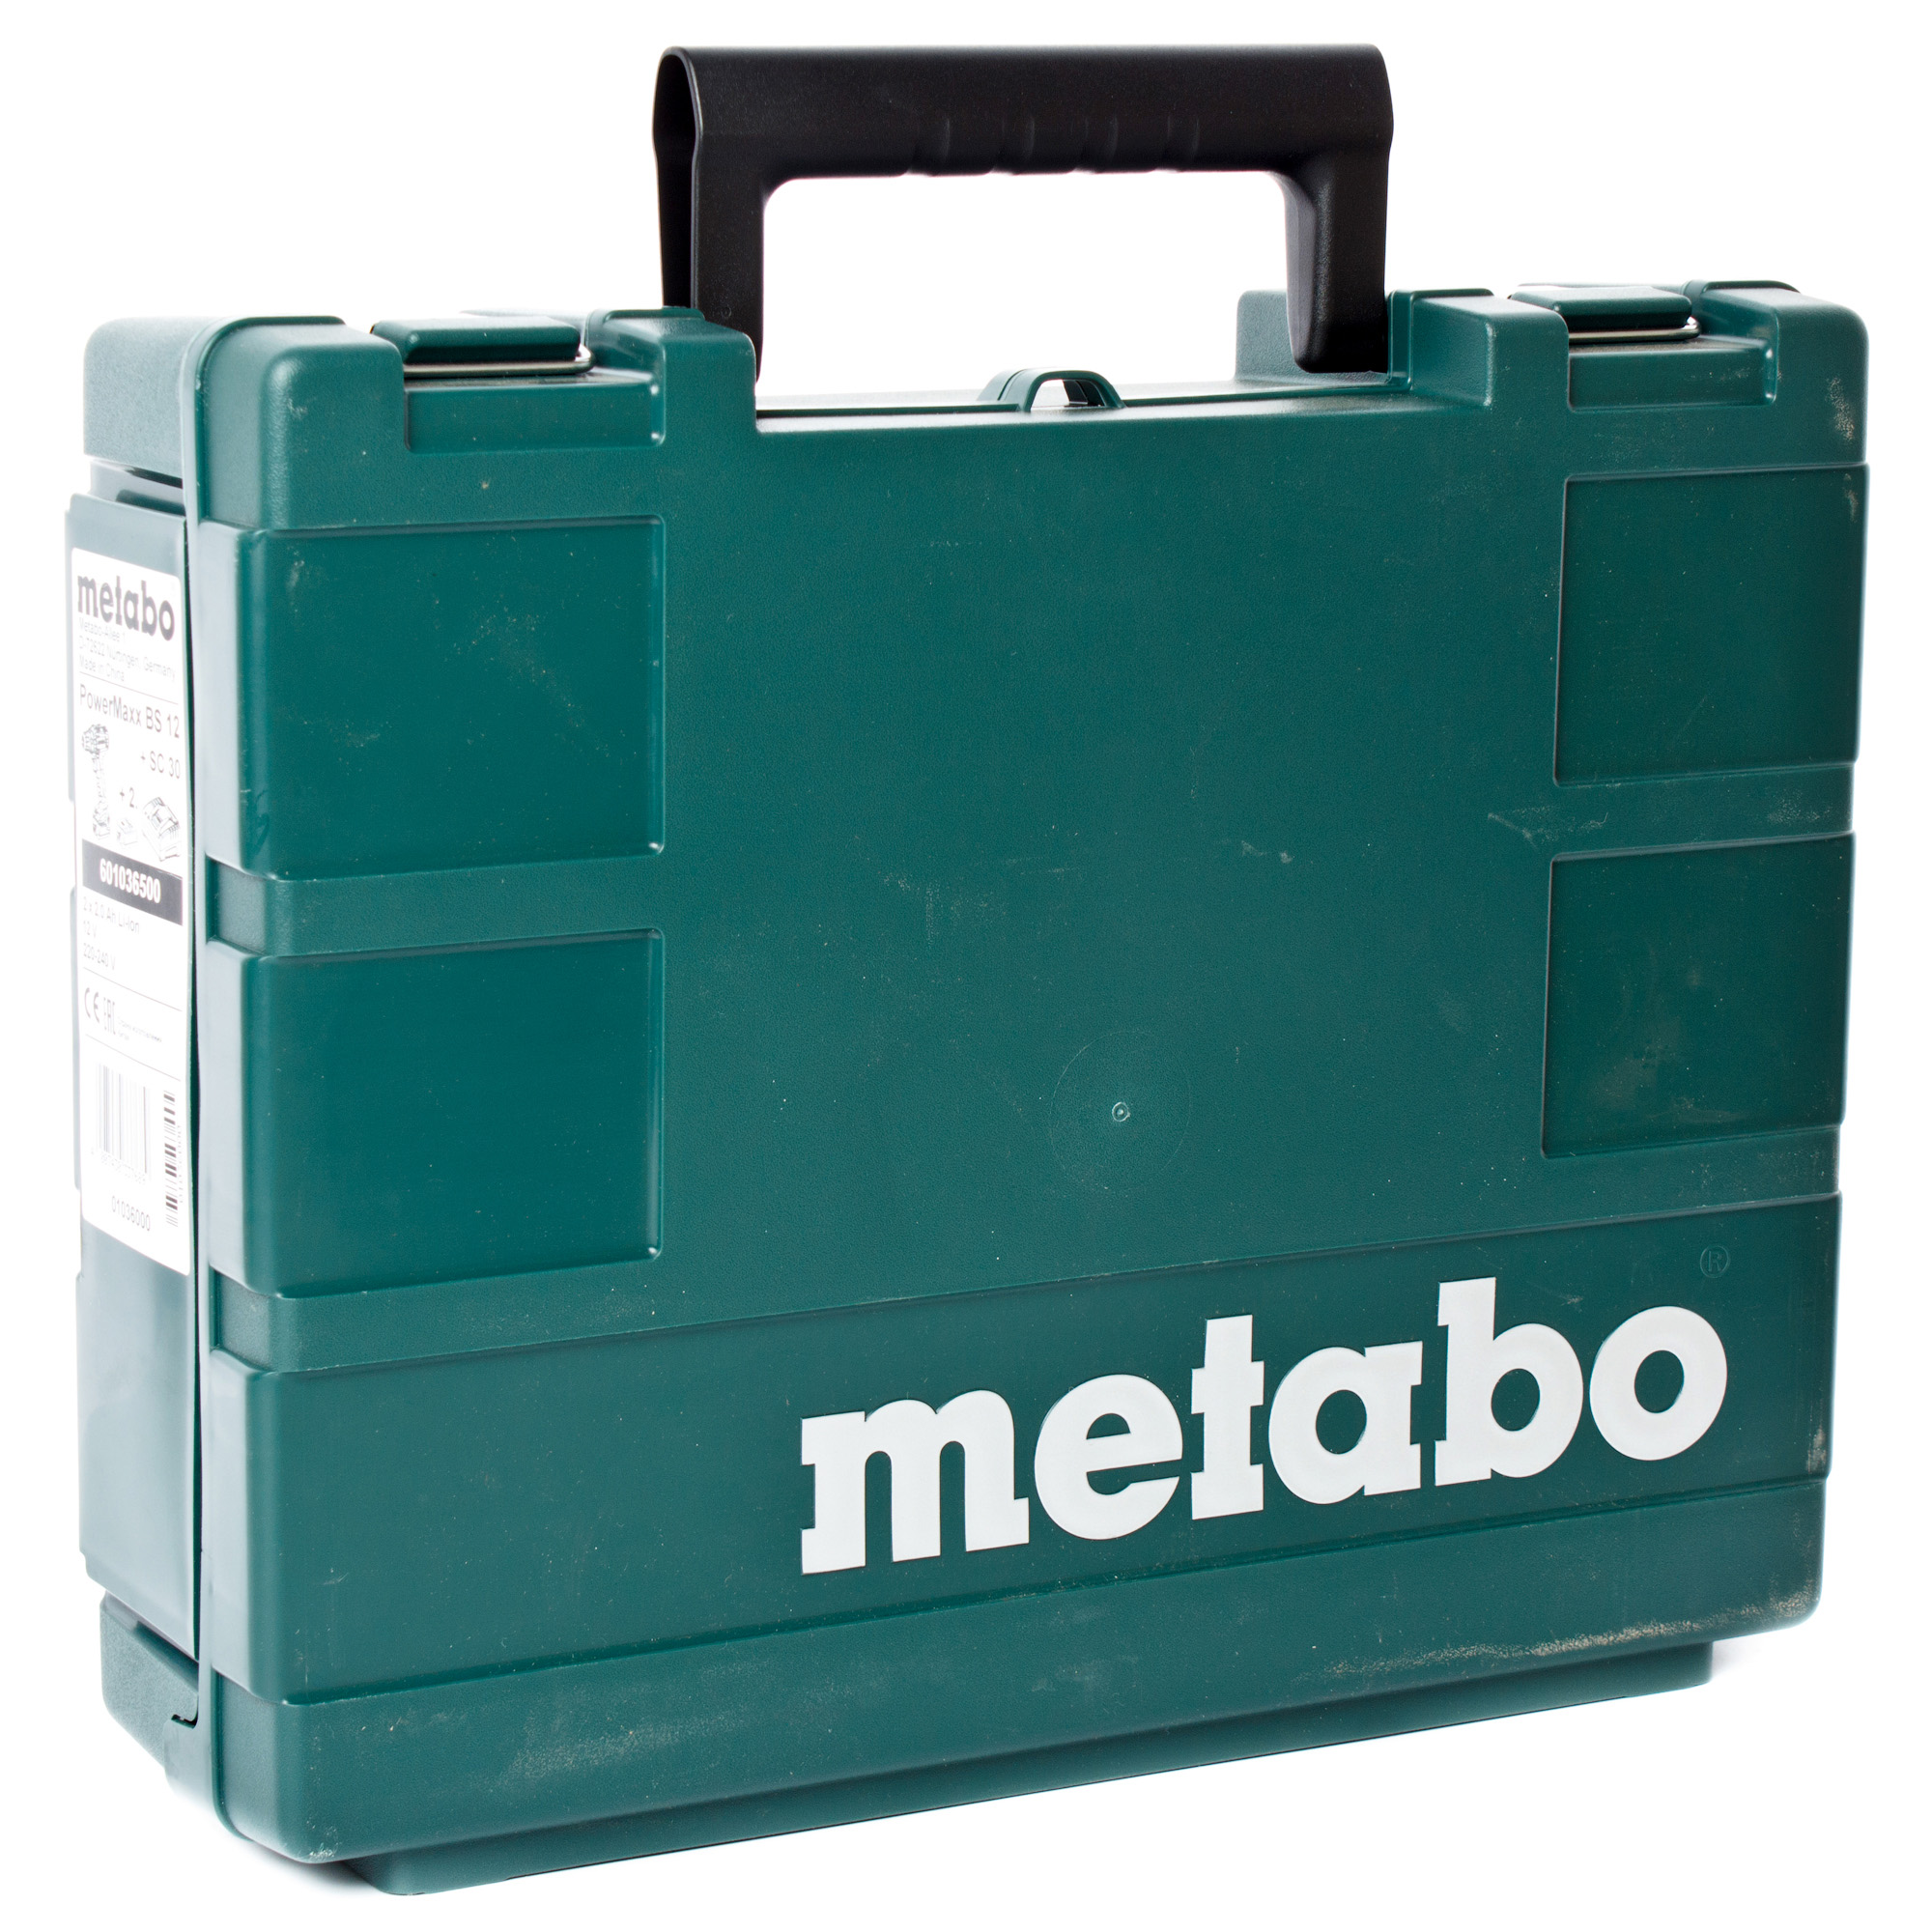 Metabo bs basic 12v. Metabo 602207560. Metabo POWERMAXX BS кейс. Metabo POWERMAXX BS 12. Metabo BS 18 L 6.02321.50.